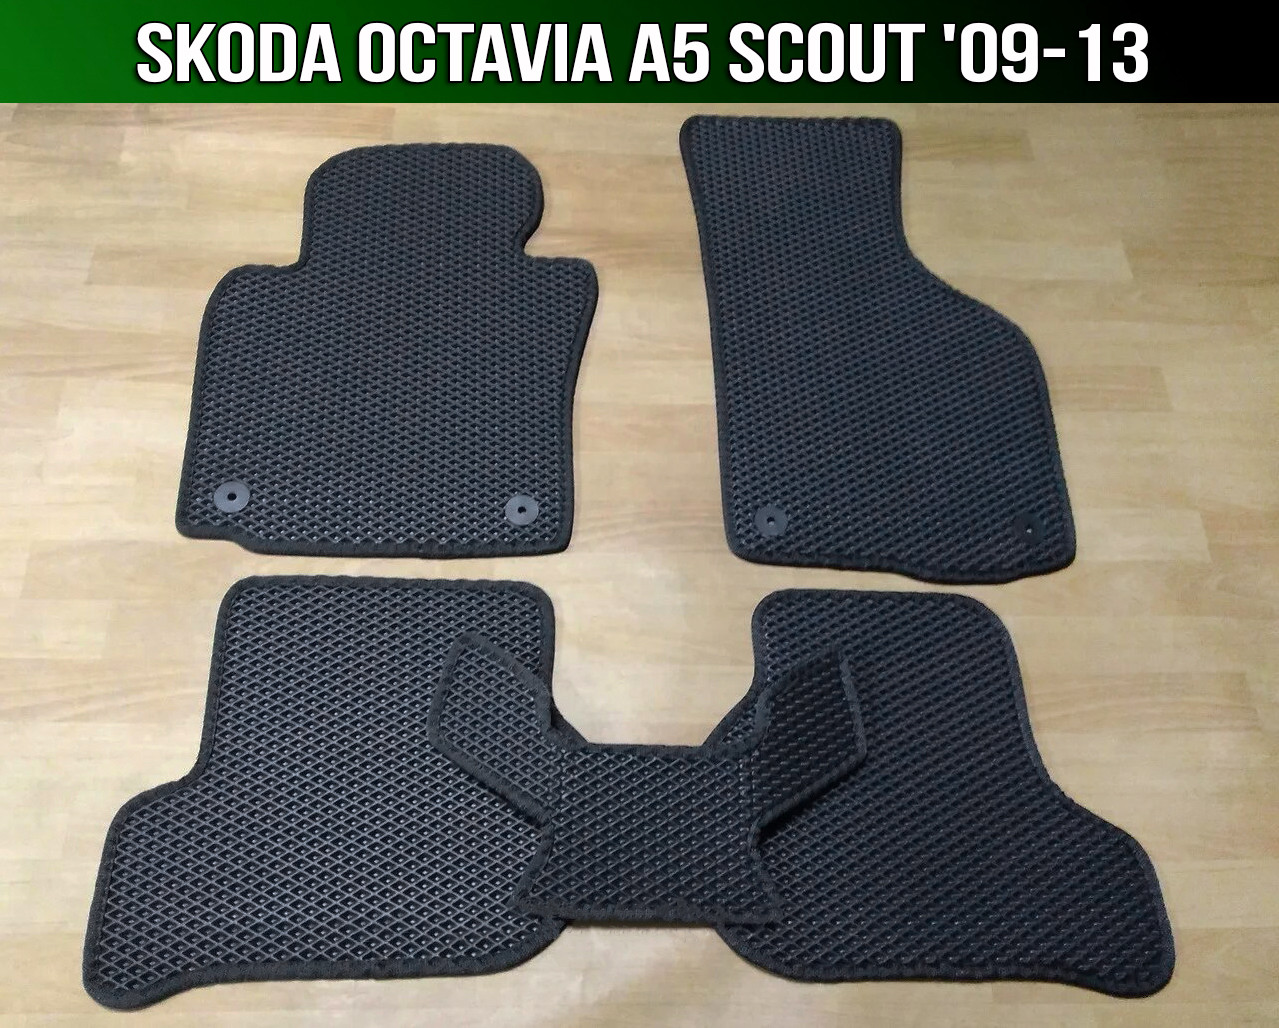 ЄВА килимки Skoda Octavia A5 Scout '09-13. EVA килими Шкода Октавія А5 скаут